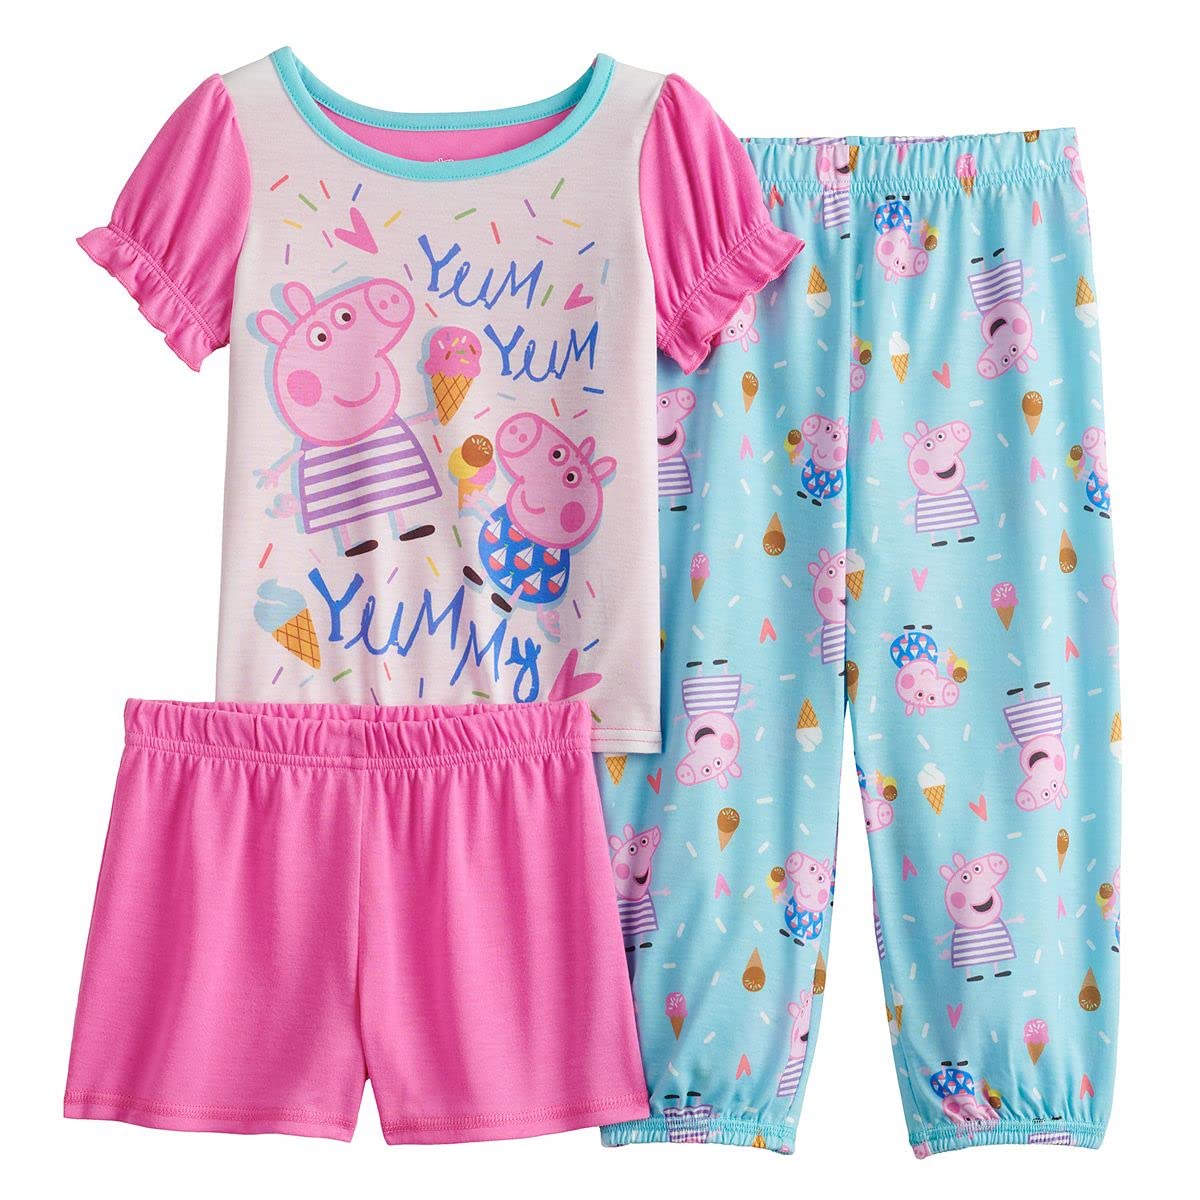 Peppa Pig Girl's YUM YUM YUMMY 3pc Pajama Set, Blue/Pink, 2T